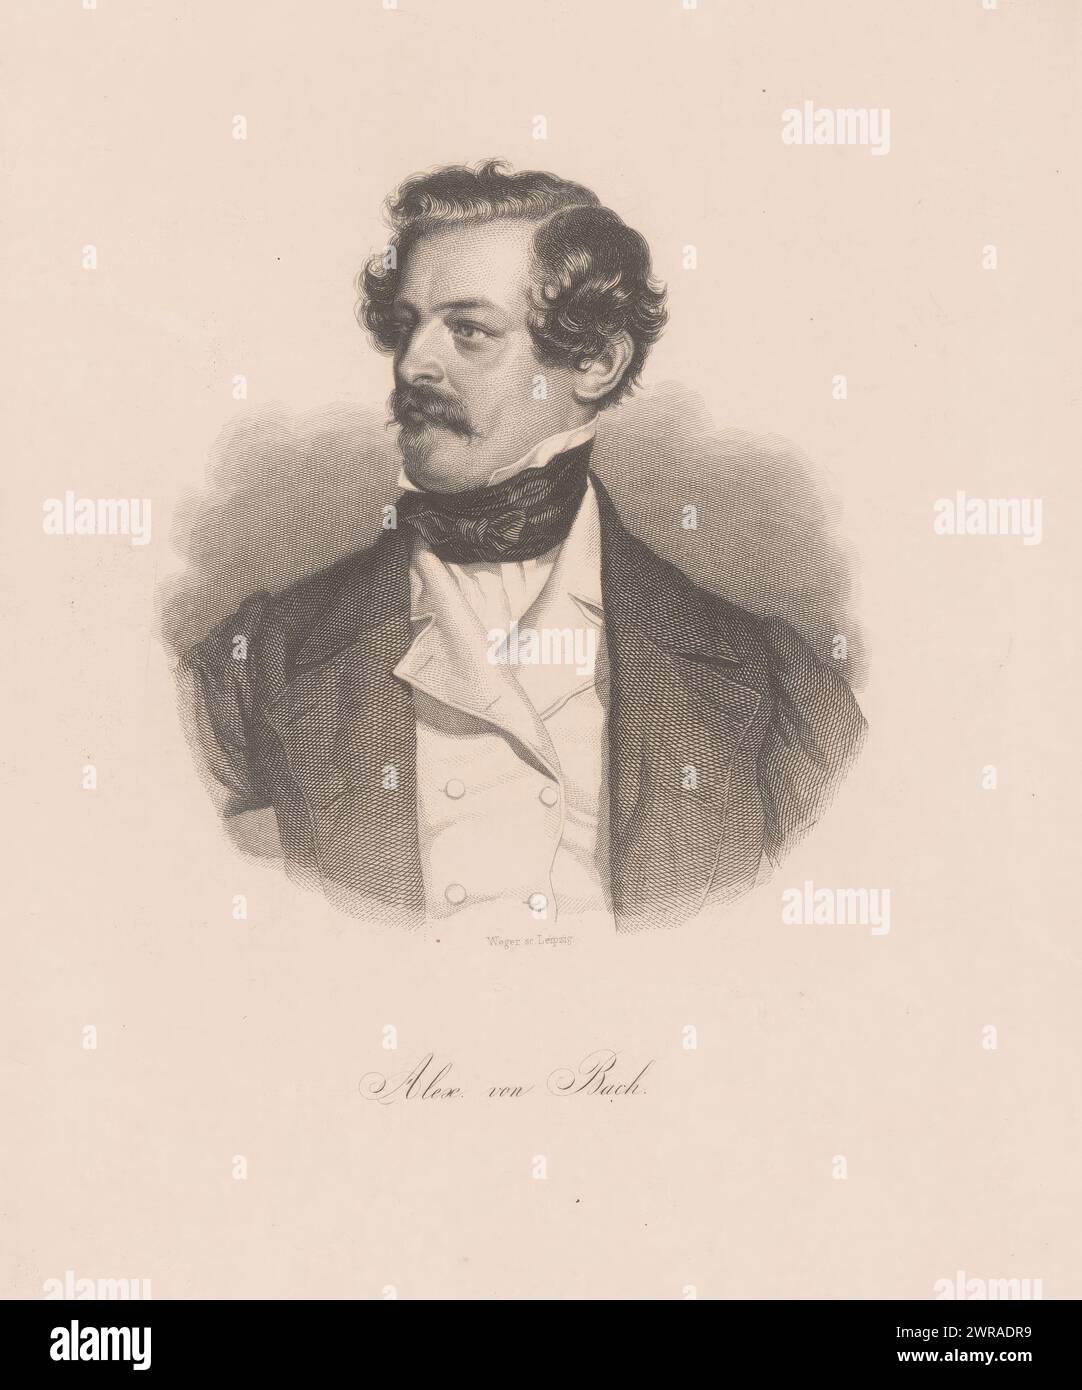 Portrait of Alexander Freiherr von Bach, print maker: August Weger, Leipzig, 1849 - 1892, paper, steel engraving, height 291 mm × width 224 mm, print Stock Photo